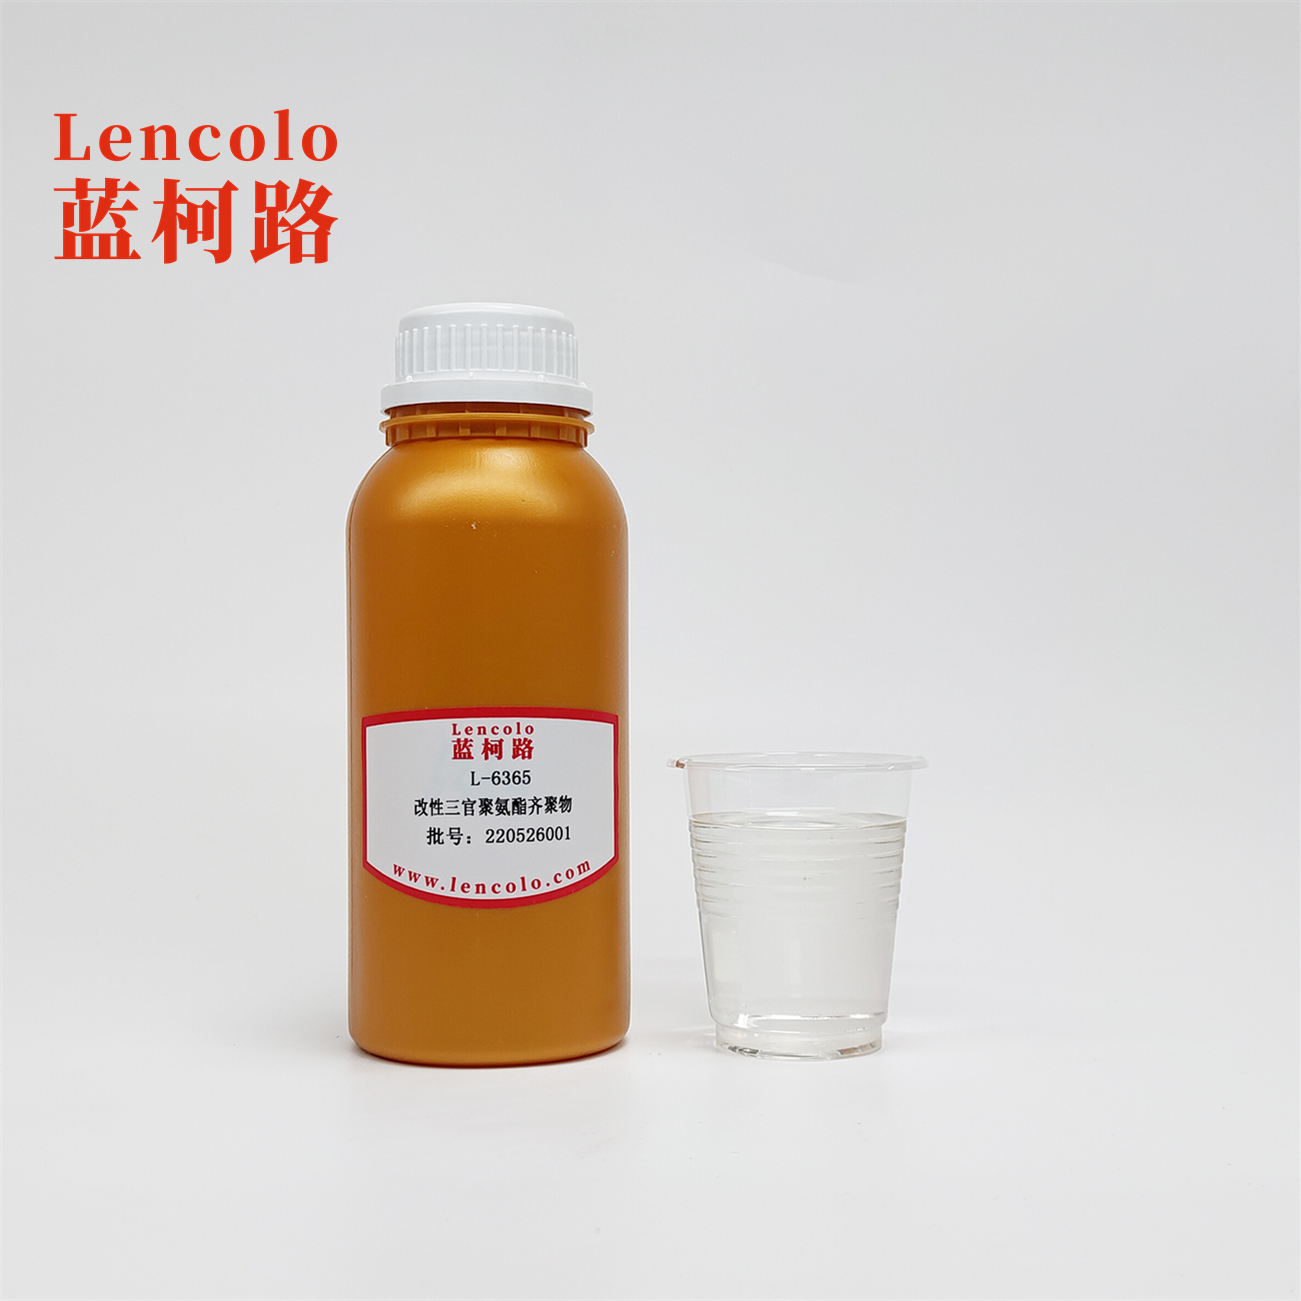 L-6365 modified 3-functional polyurethane oligomer uv curing resin good adhesion, hardness and leveling.